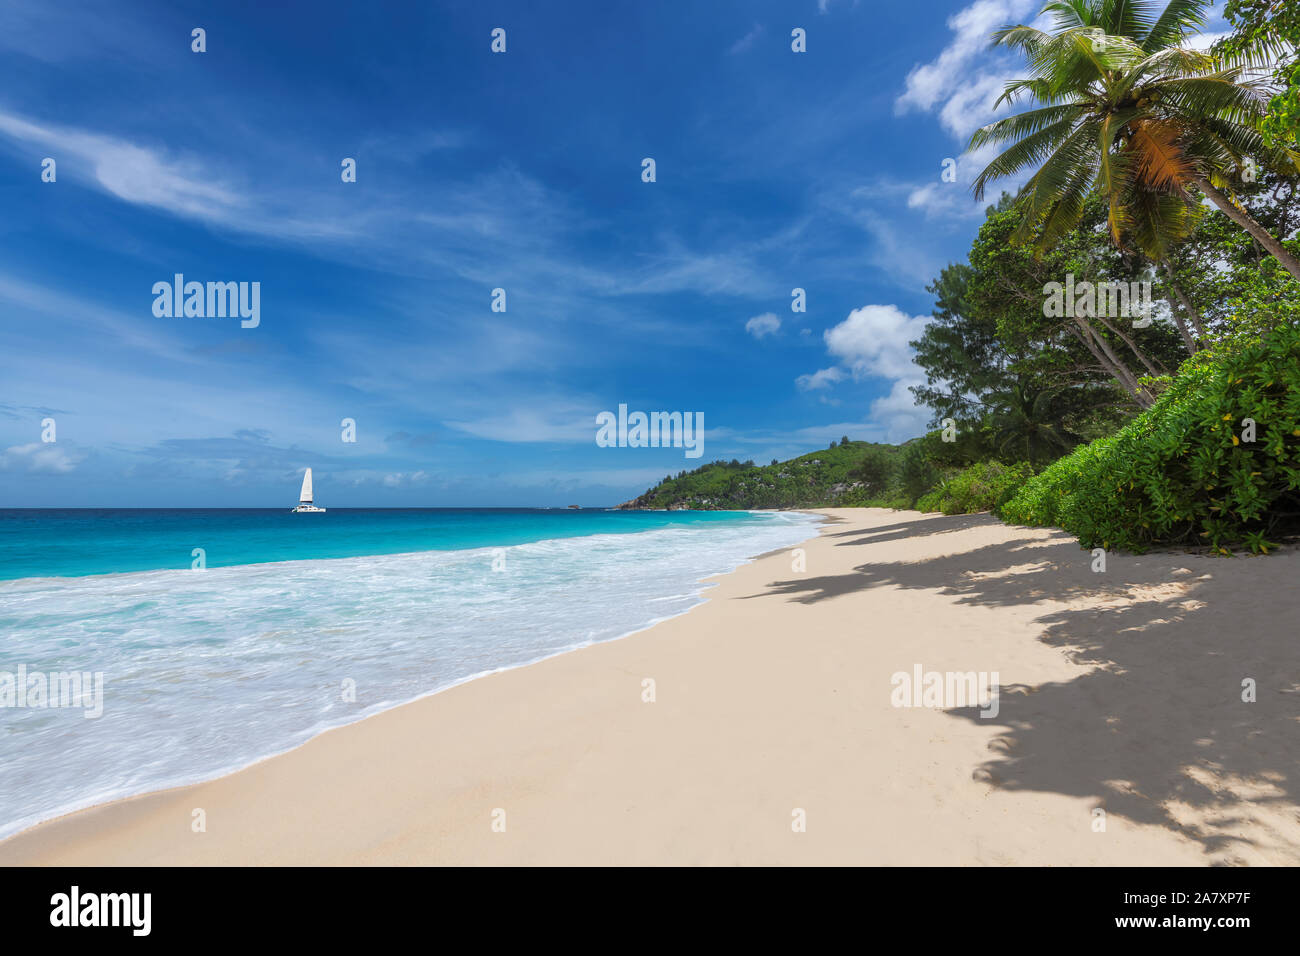 White sand beach with coconut palm trees on ocean beach Stock Photo